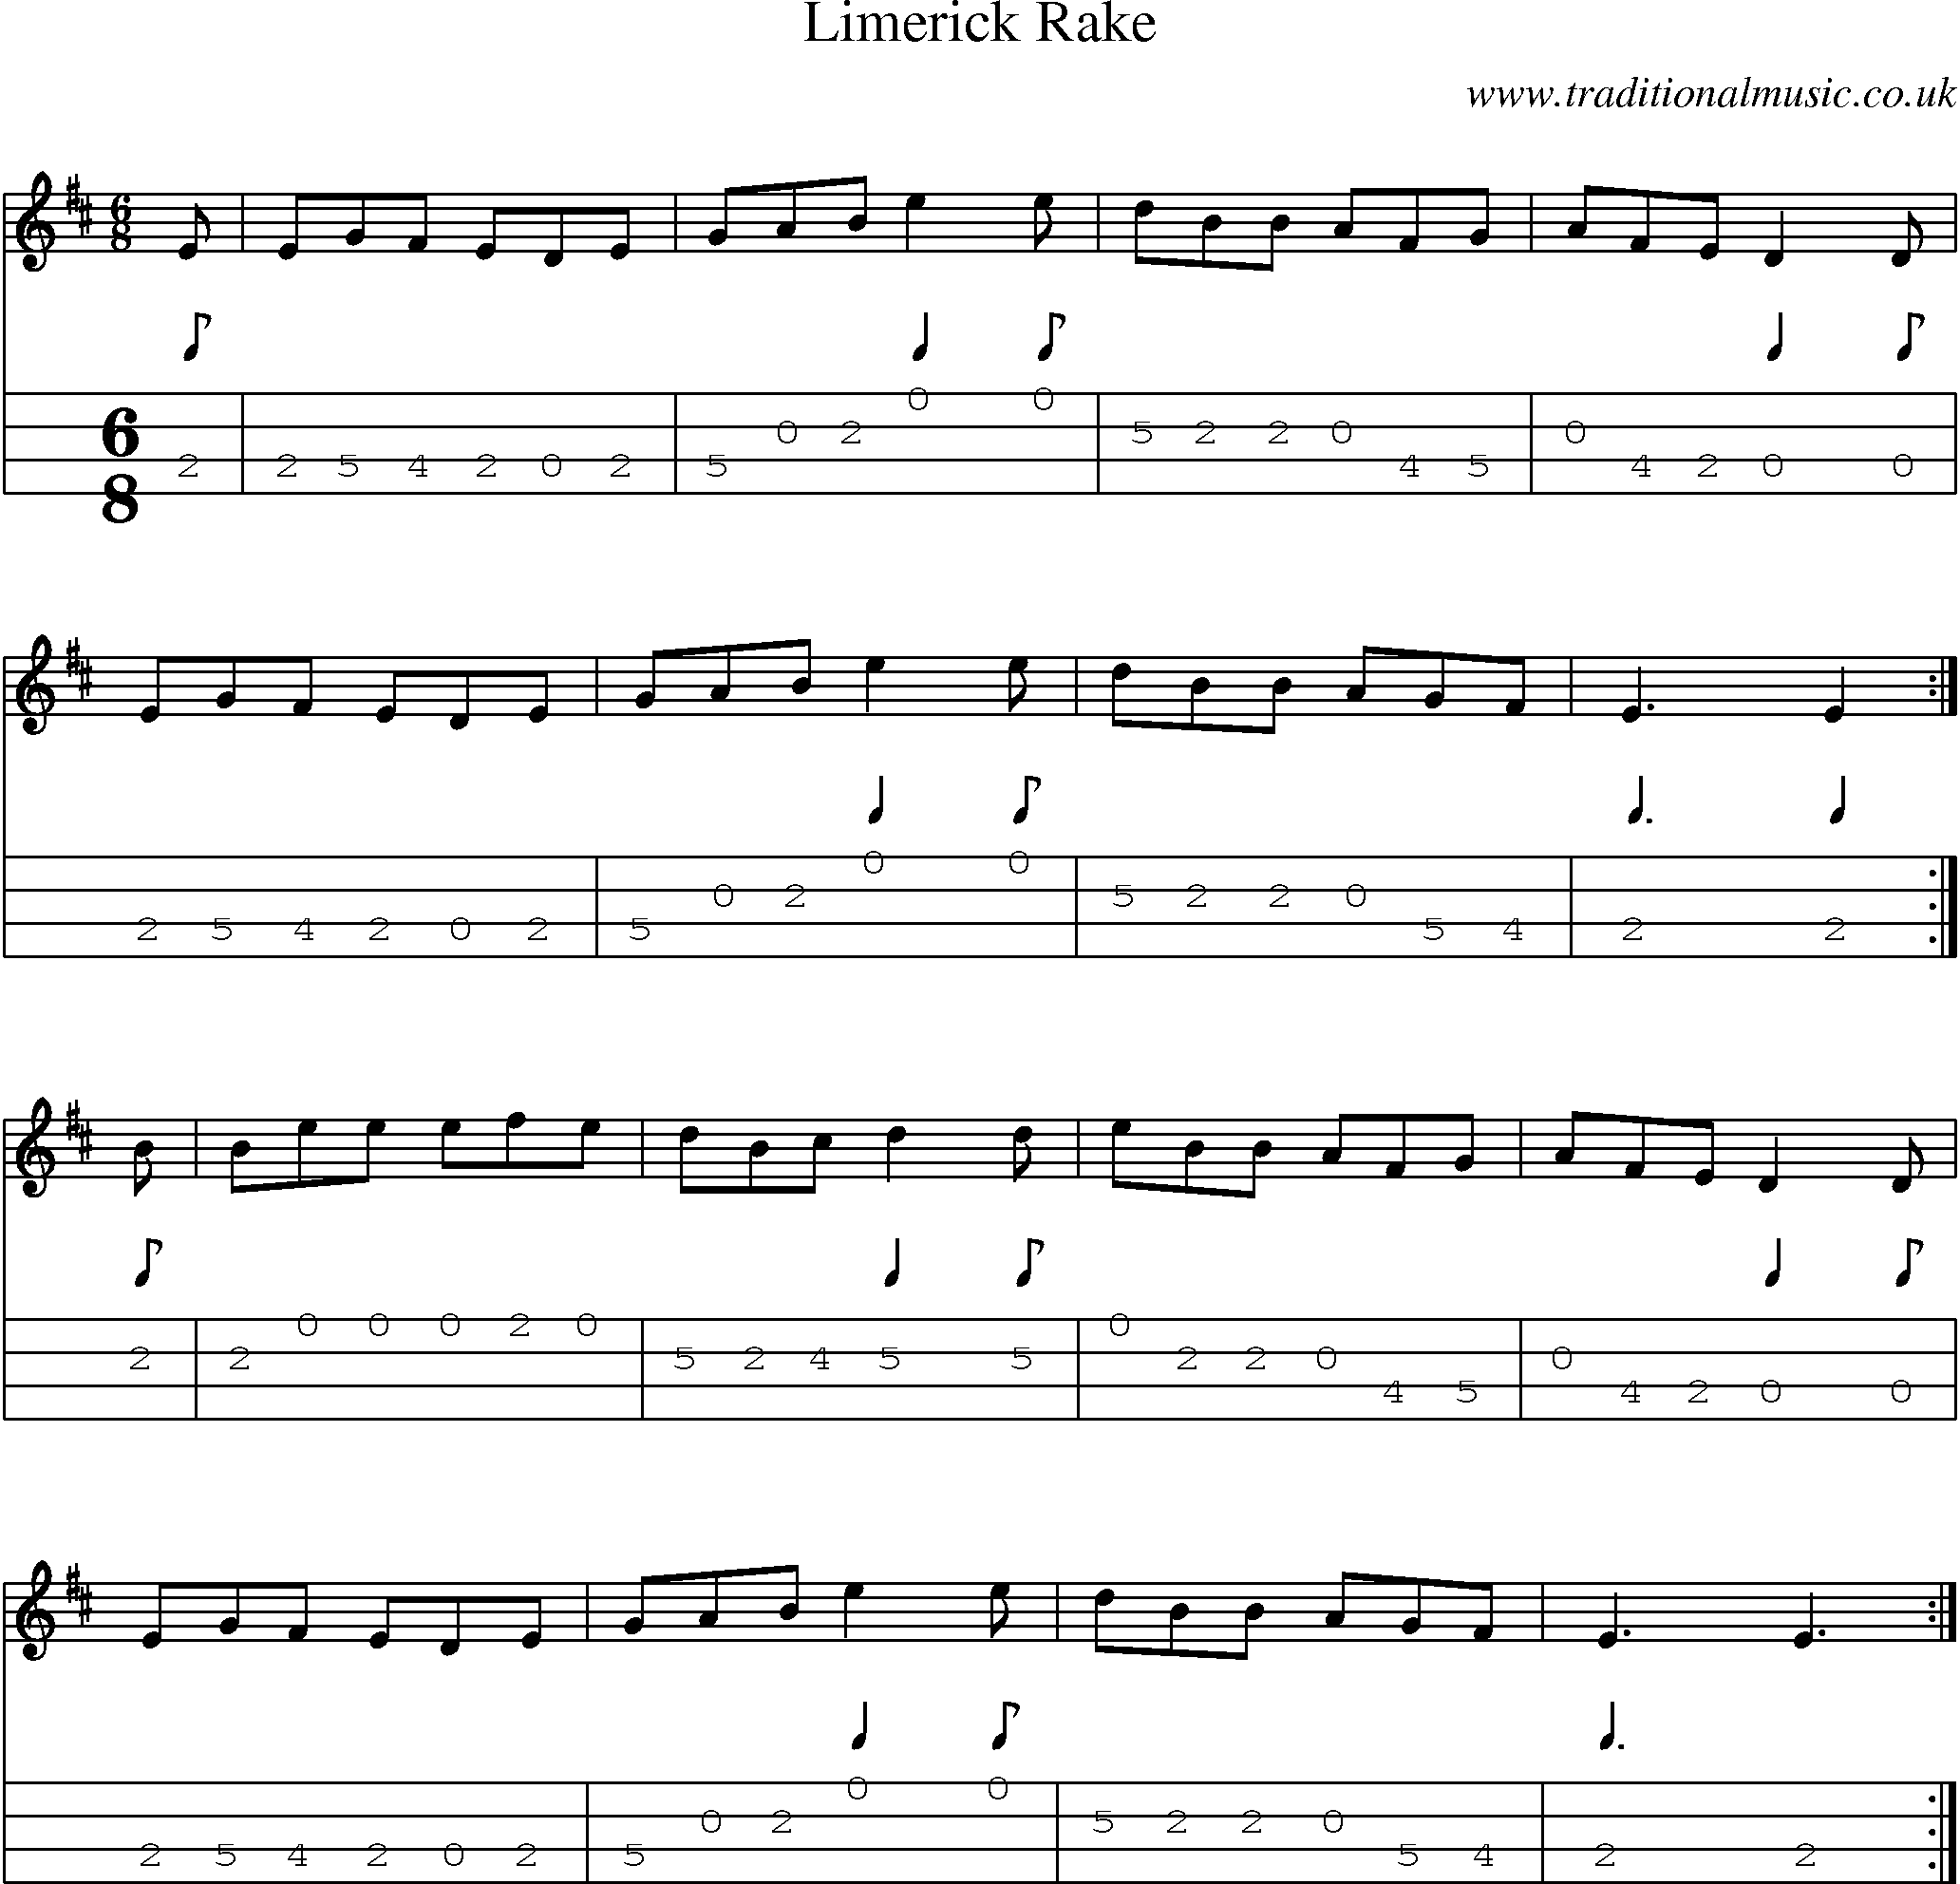 Music Score and Mandolin Tabs for Limerick Rake